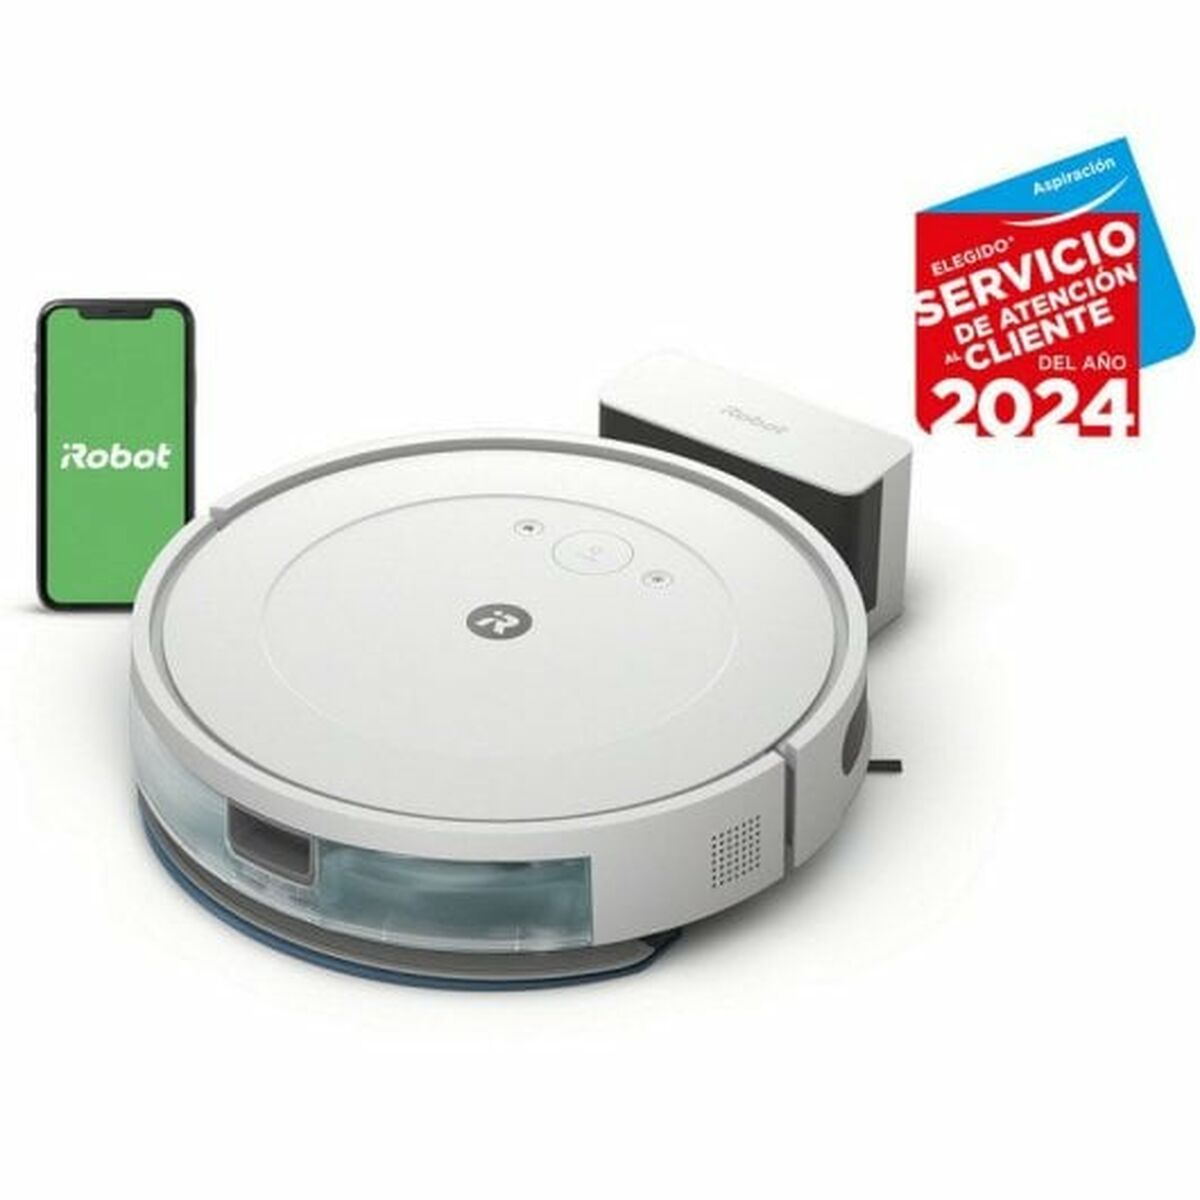 Roboterstaubsauger iRobot Roomba Combo Essential 2600 mAh - CA International 